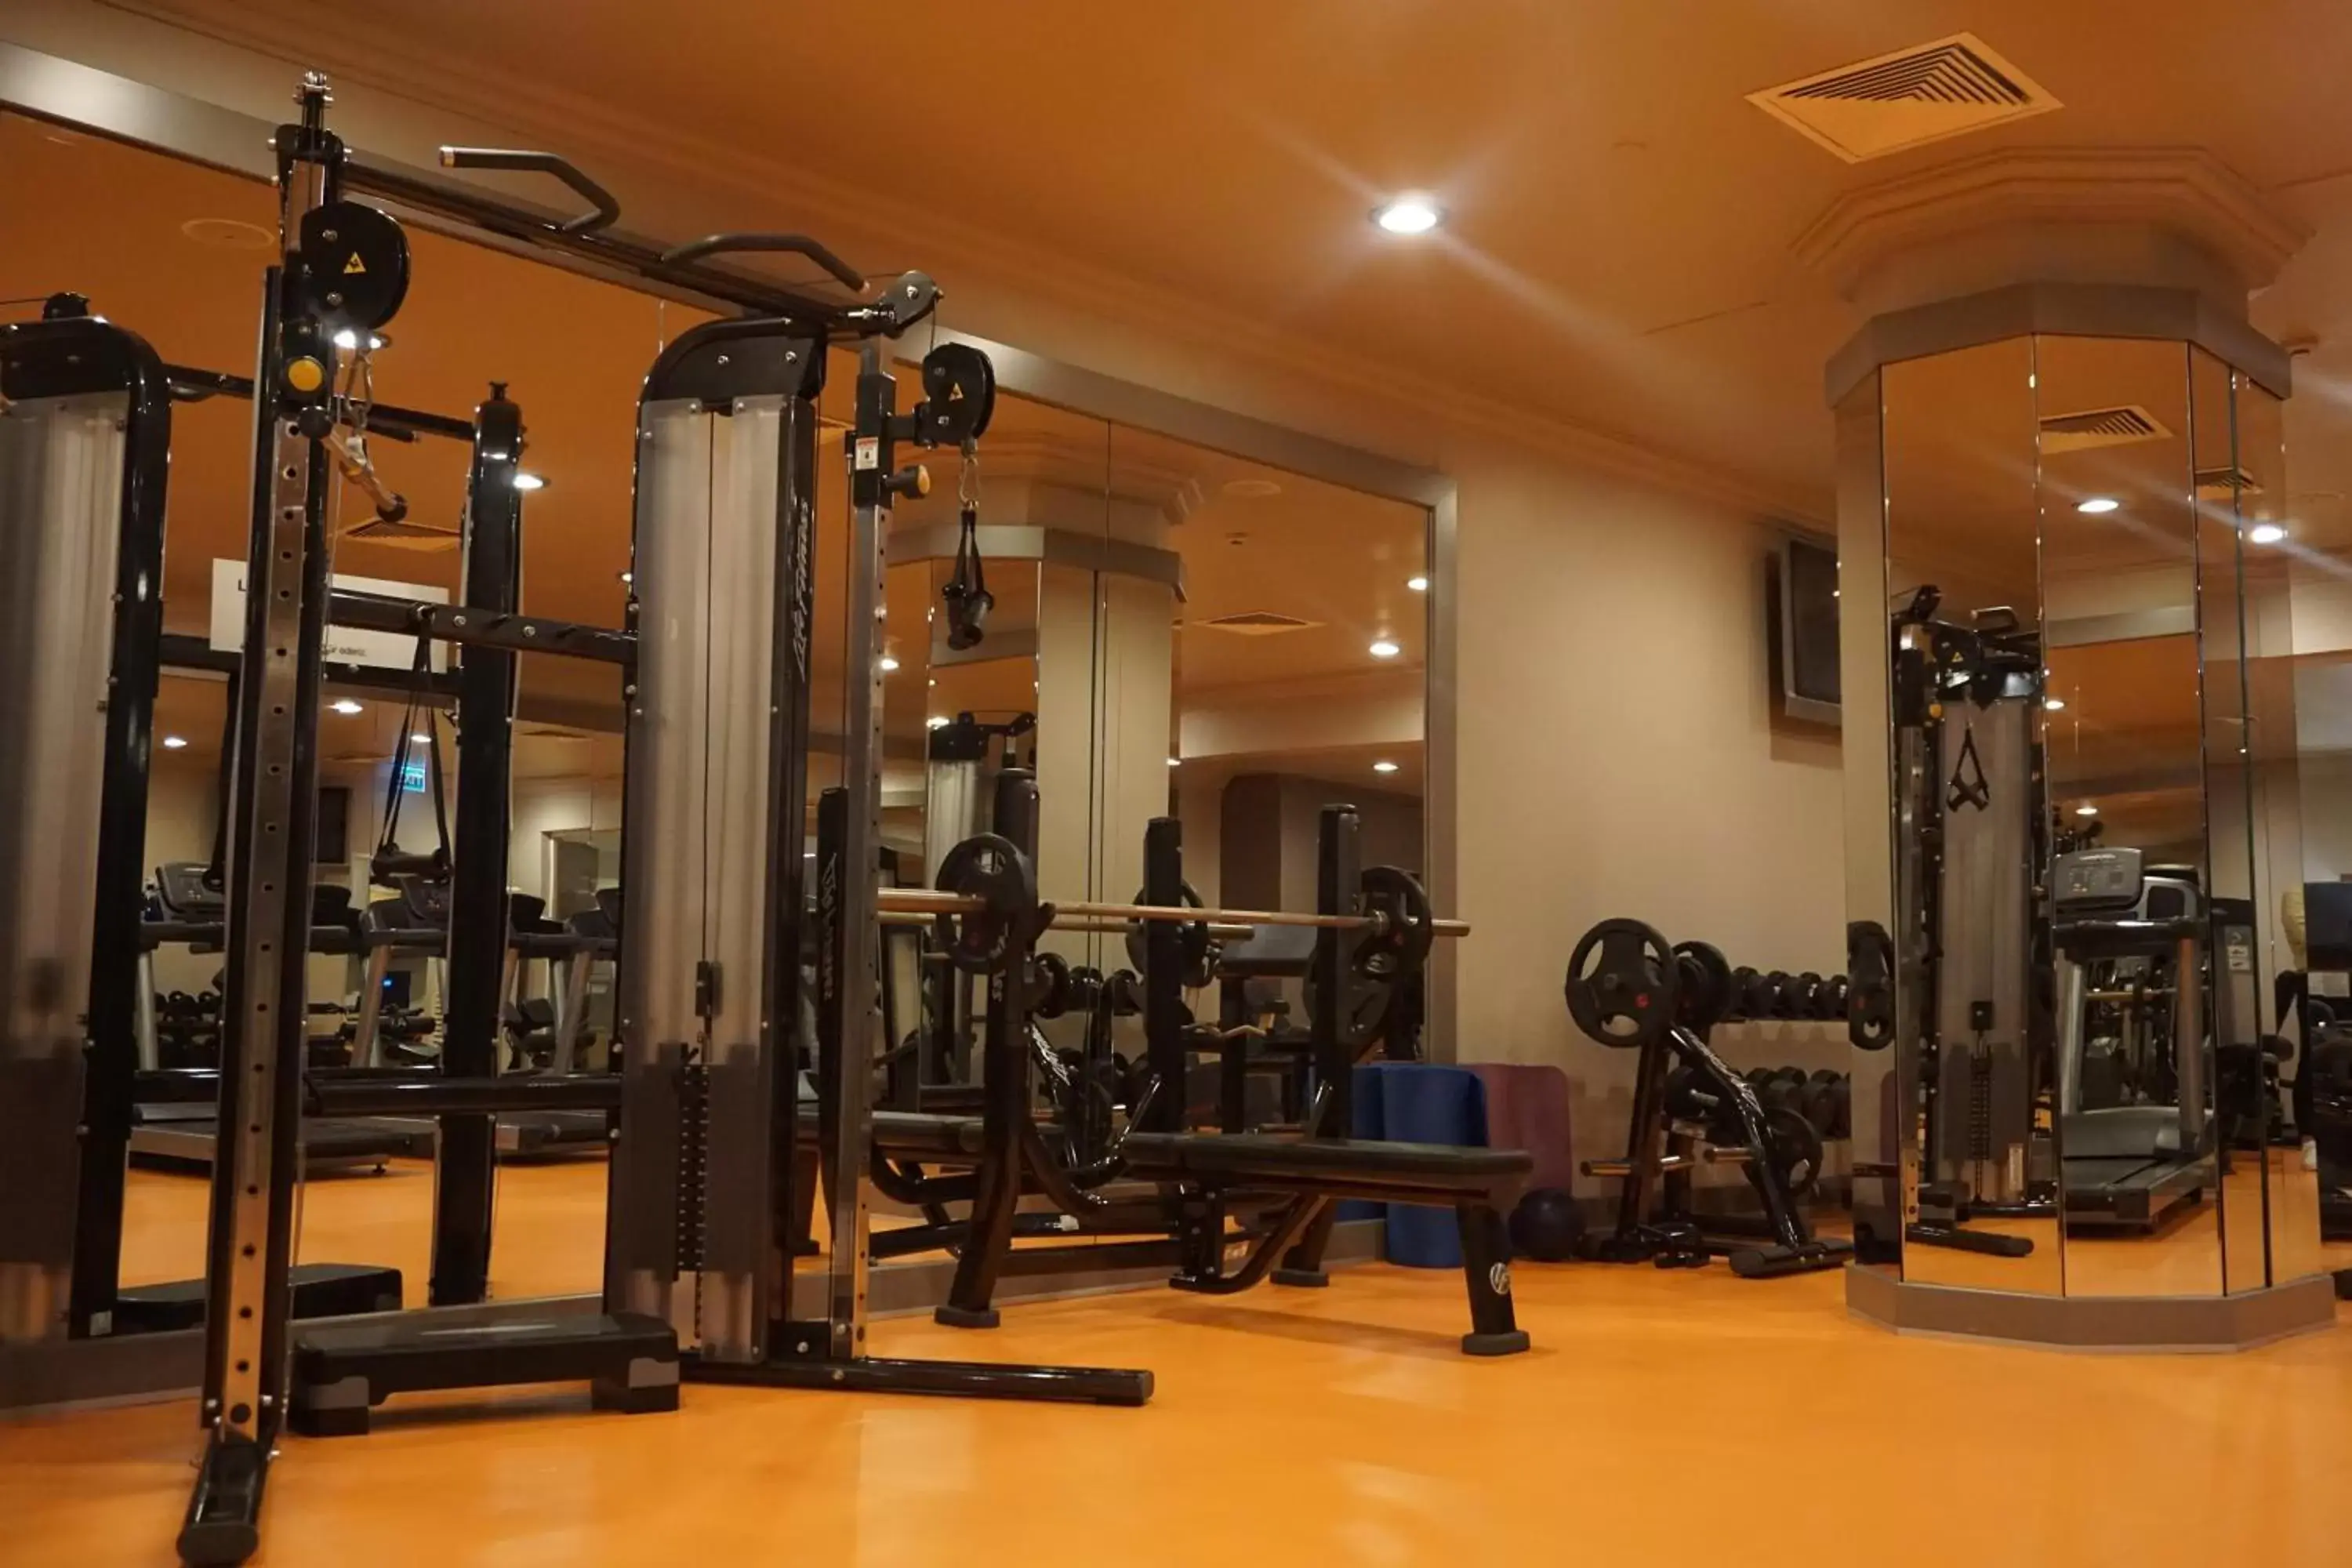 Fitness centre/facilities, Fitness Center/Facilities in Eresin Hotels Topkapi